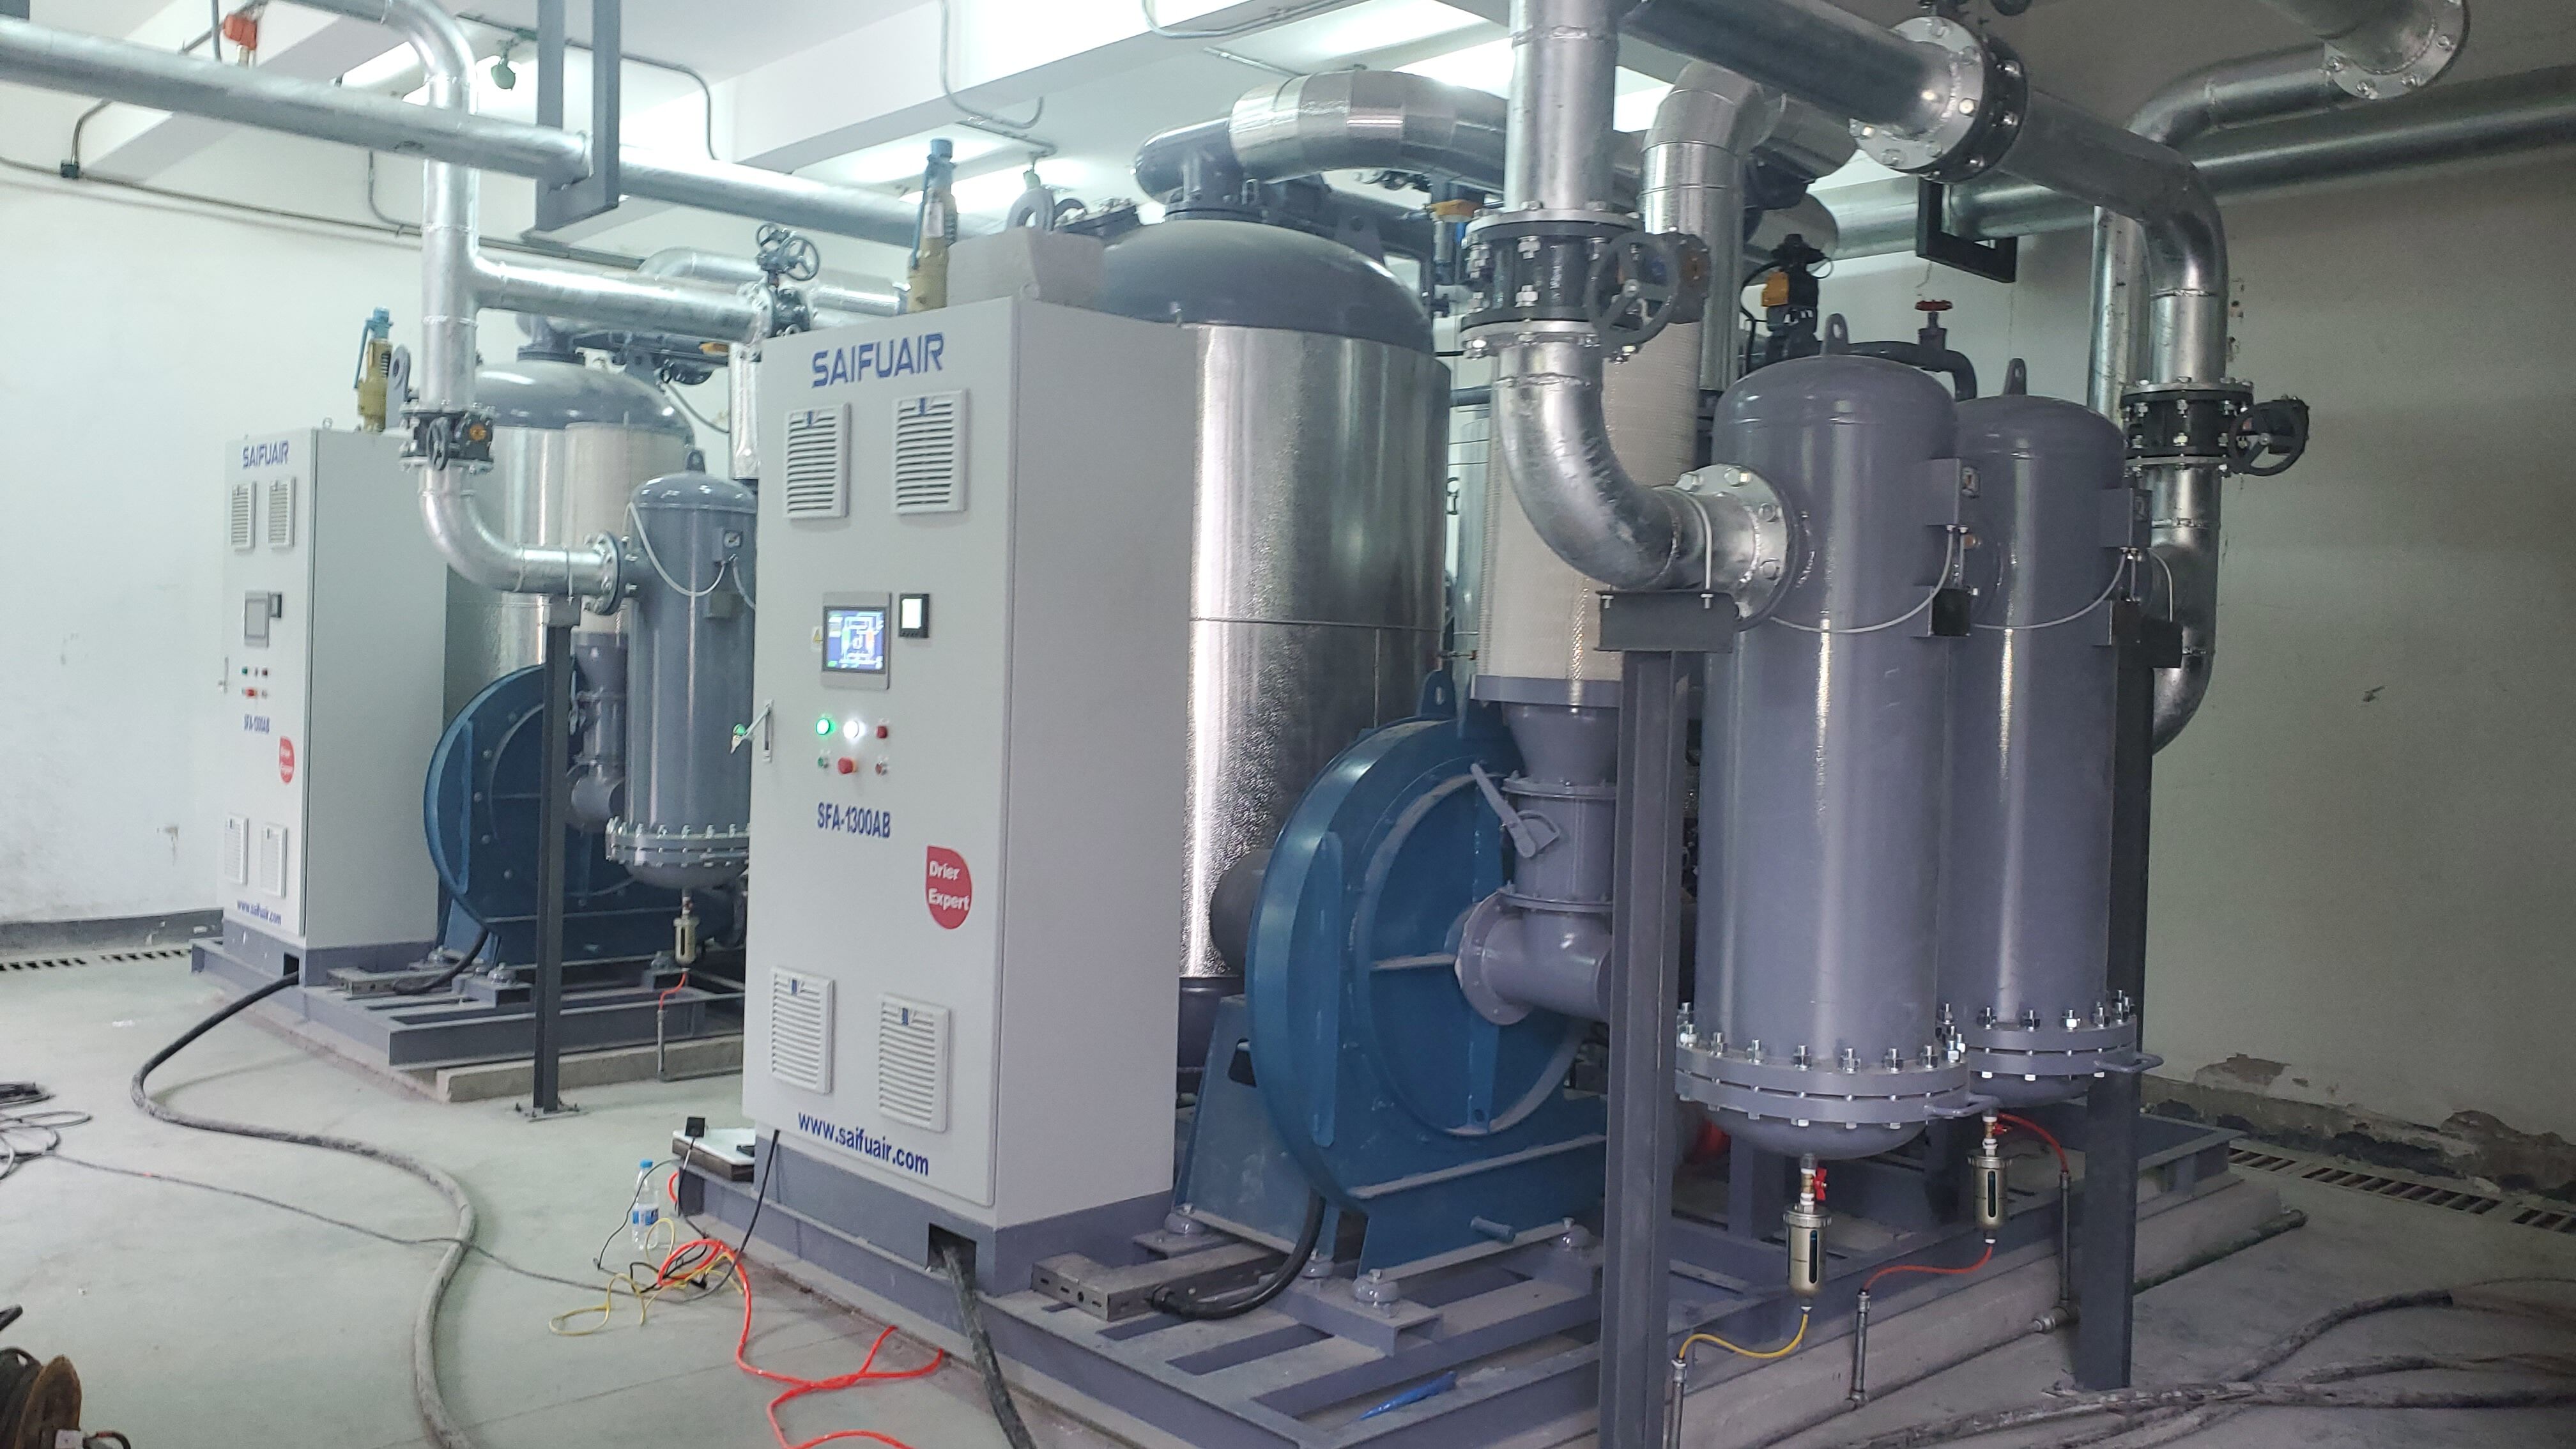 SAIFUAIR Blast Dryer Helps Precision Machinery Enterprises Reduce Costs and Increase Efficiency